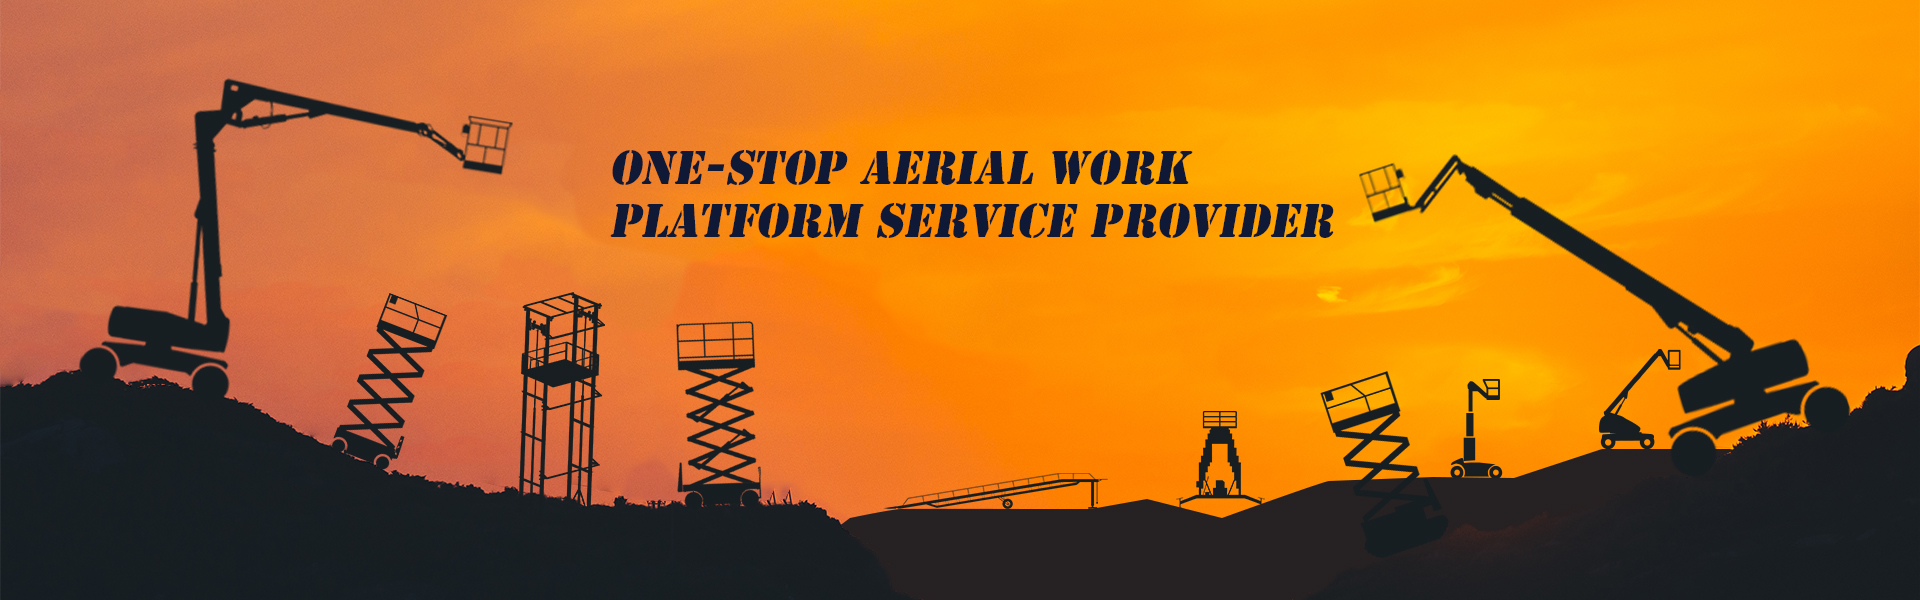 aerial work platform manufacturer